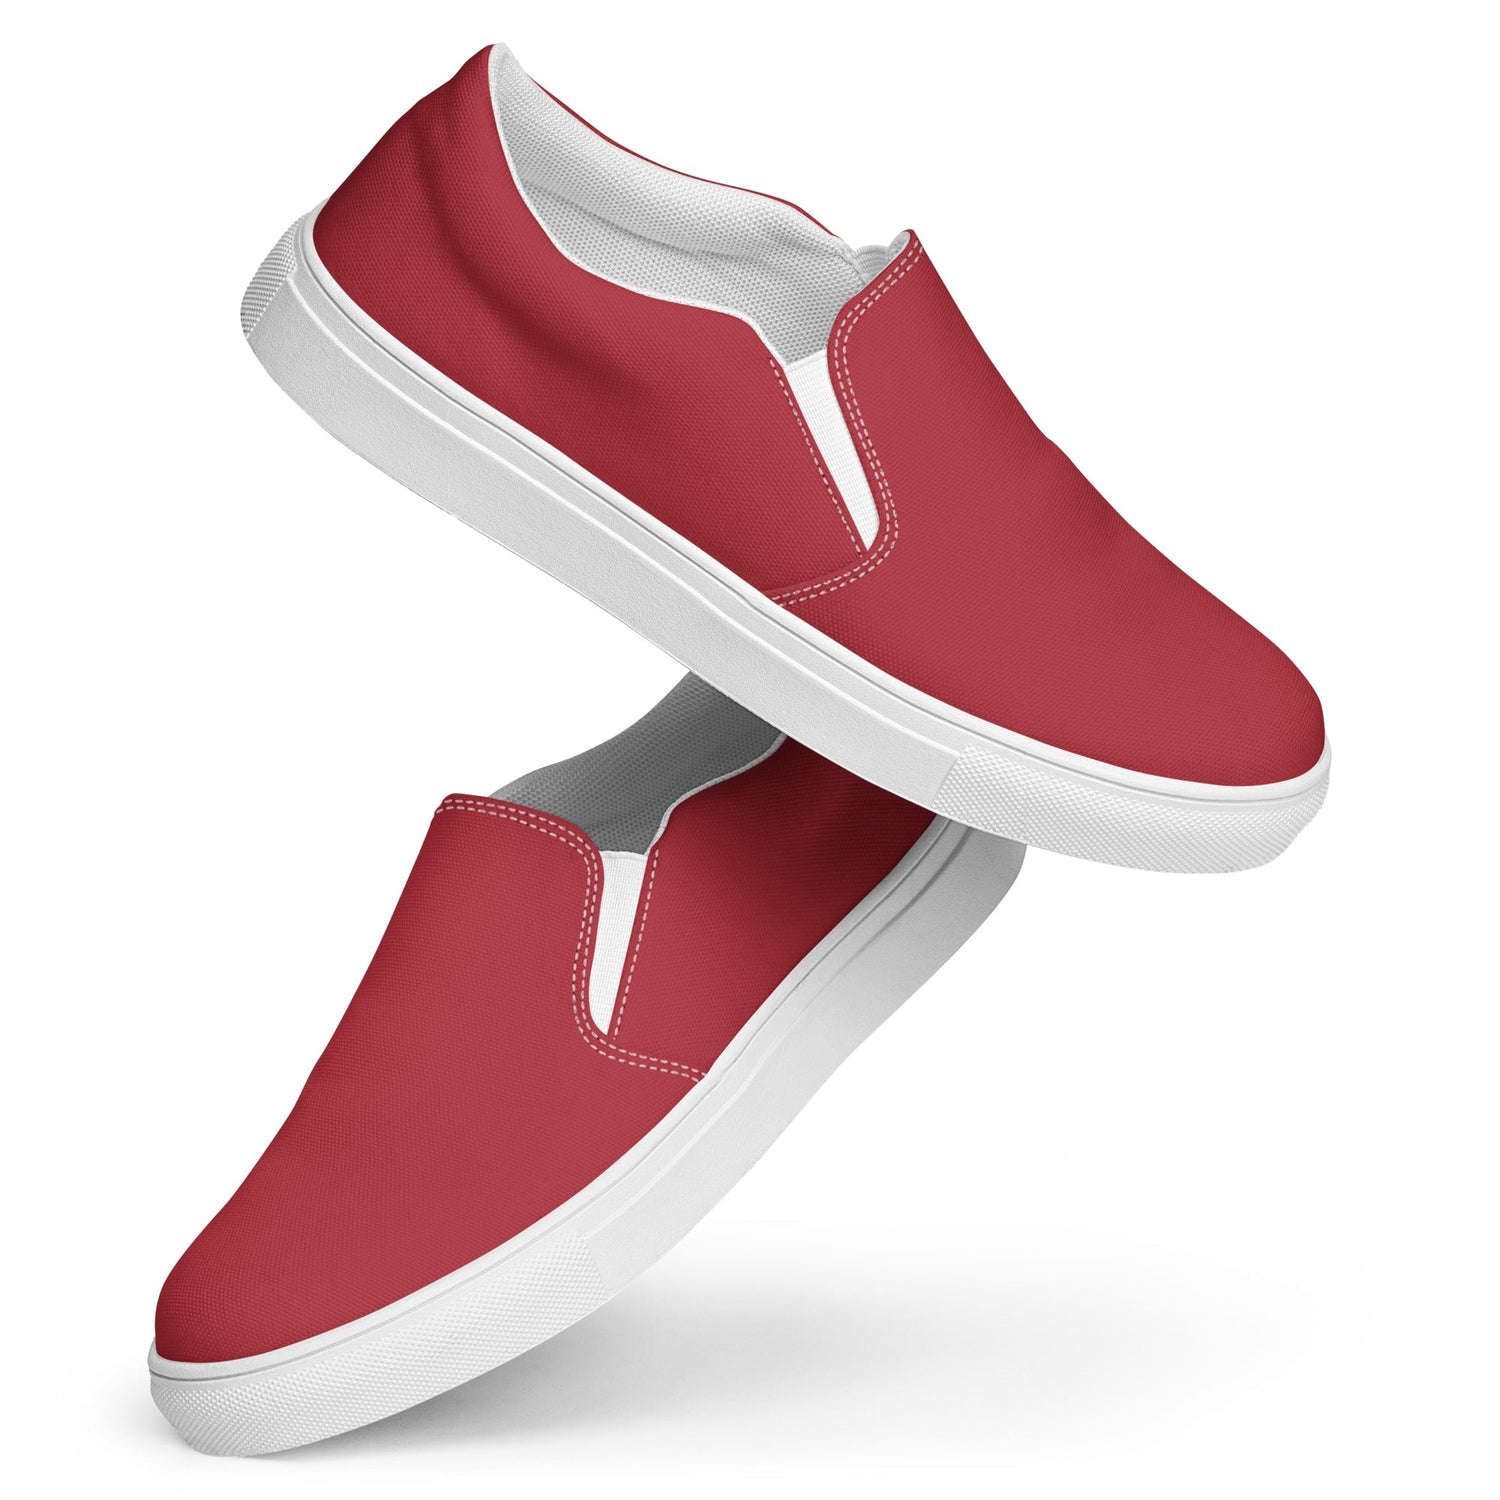 klasneakers Women’s slip-on canvas shoes - Red